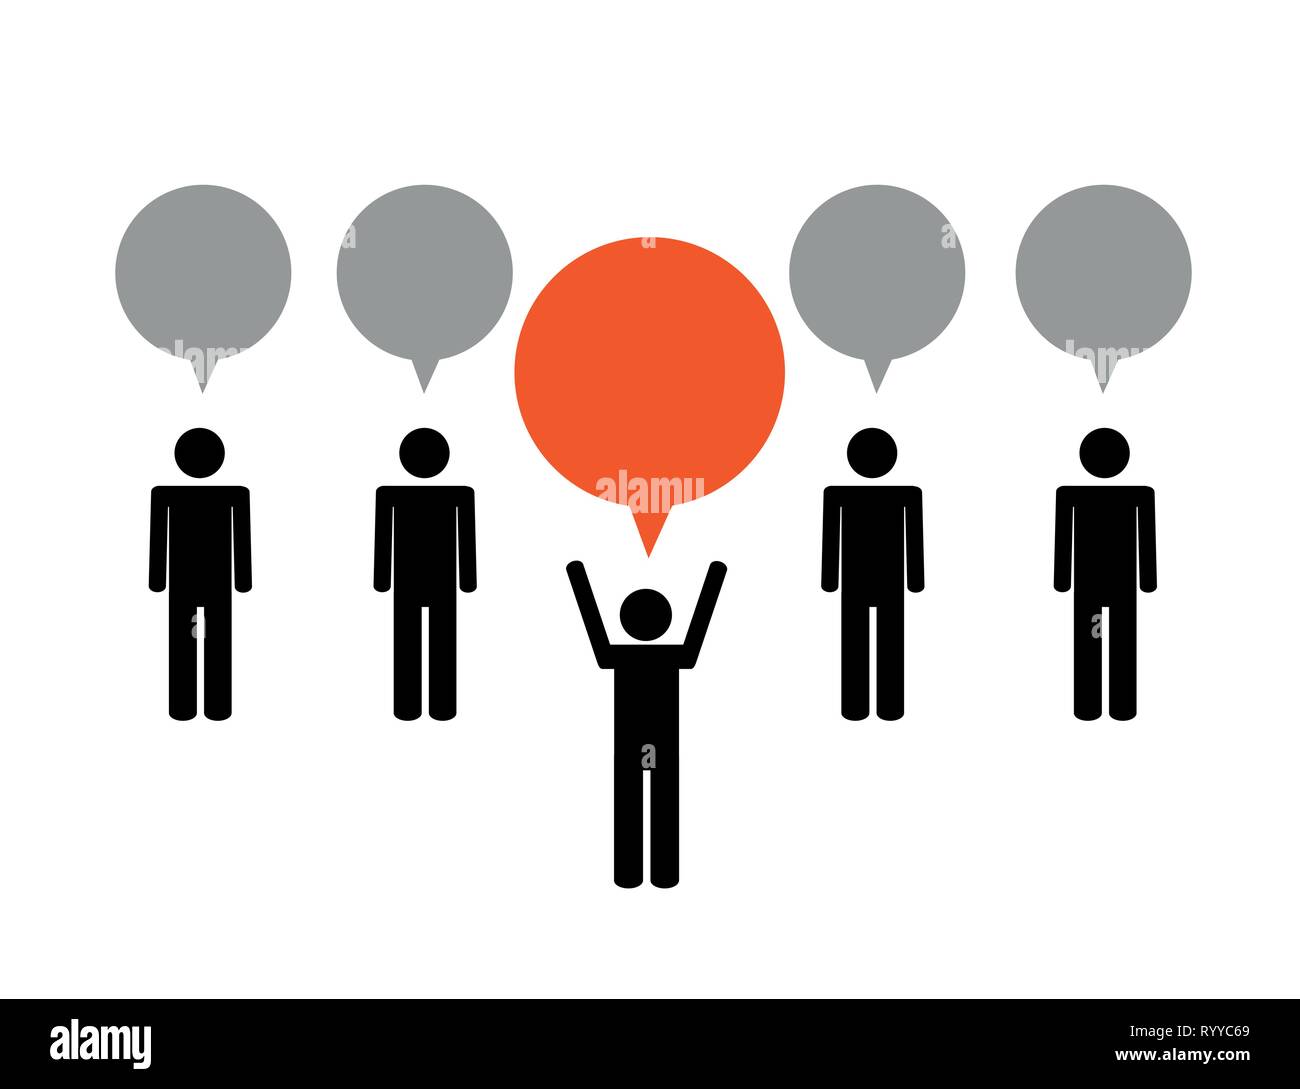 teamwork leader and idea business concept vector illustration Stock Vector